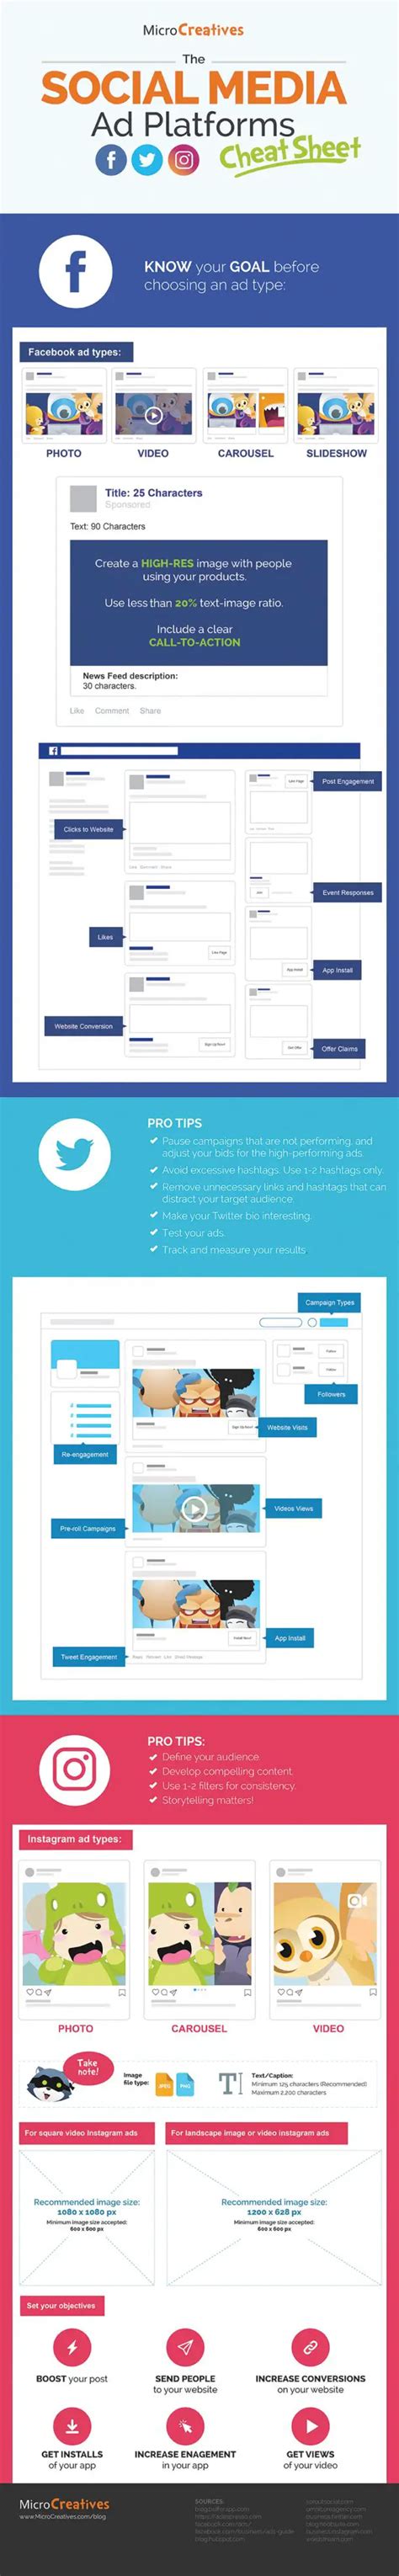 The Social Media Ad Platforms Cheat Sheet Infographic Business Partner Magazine